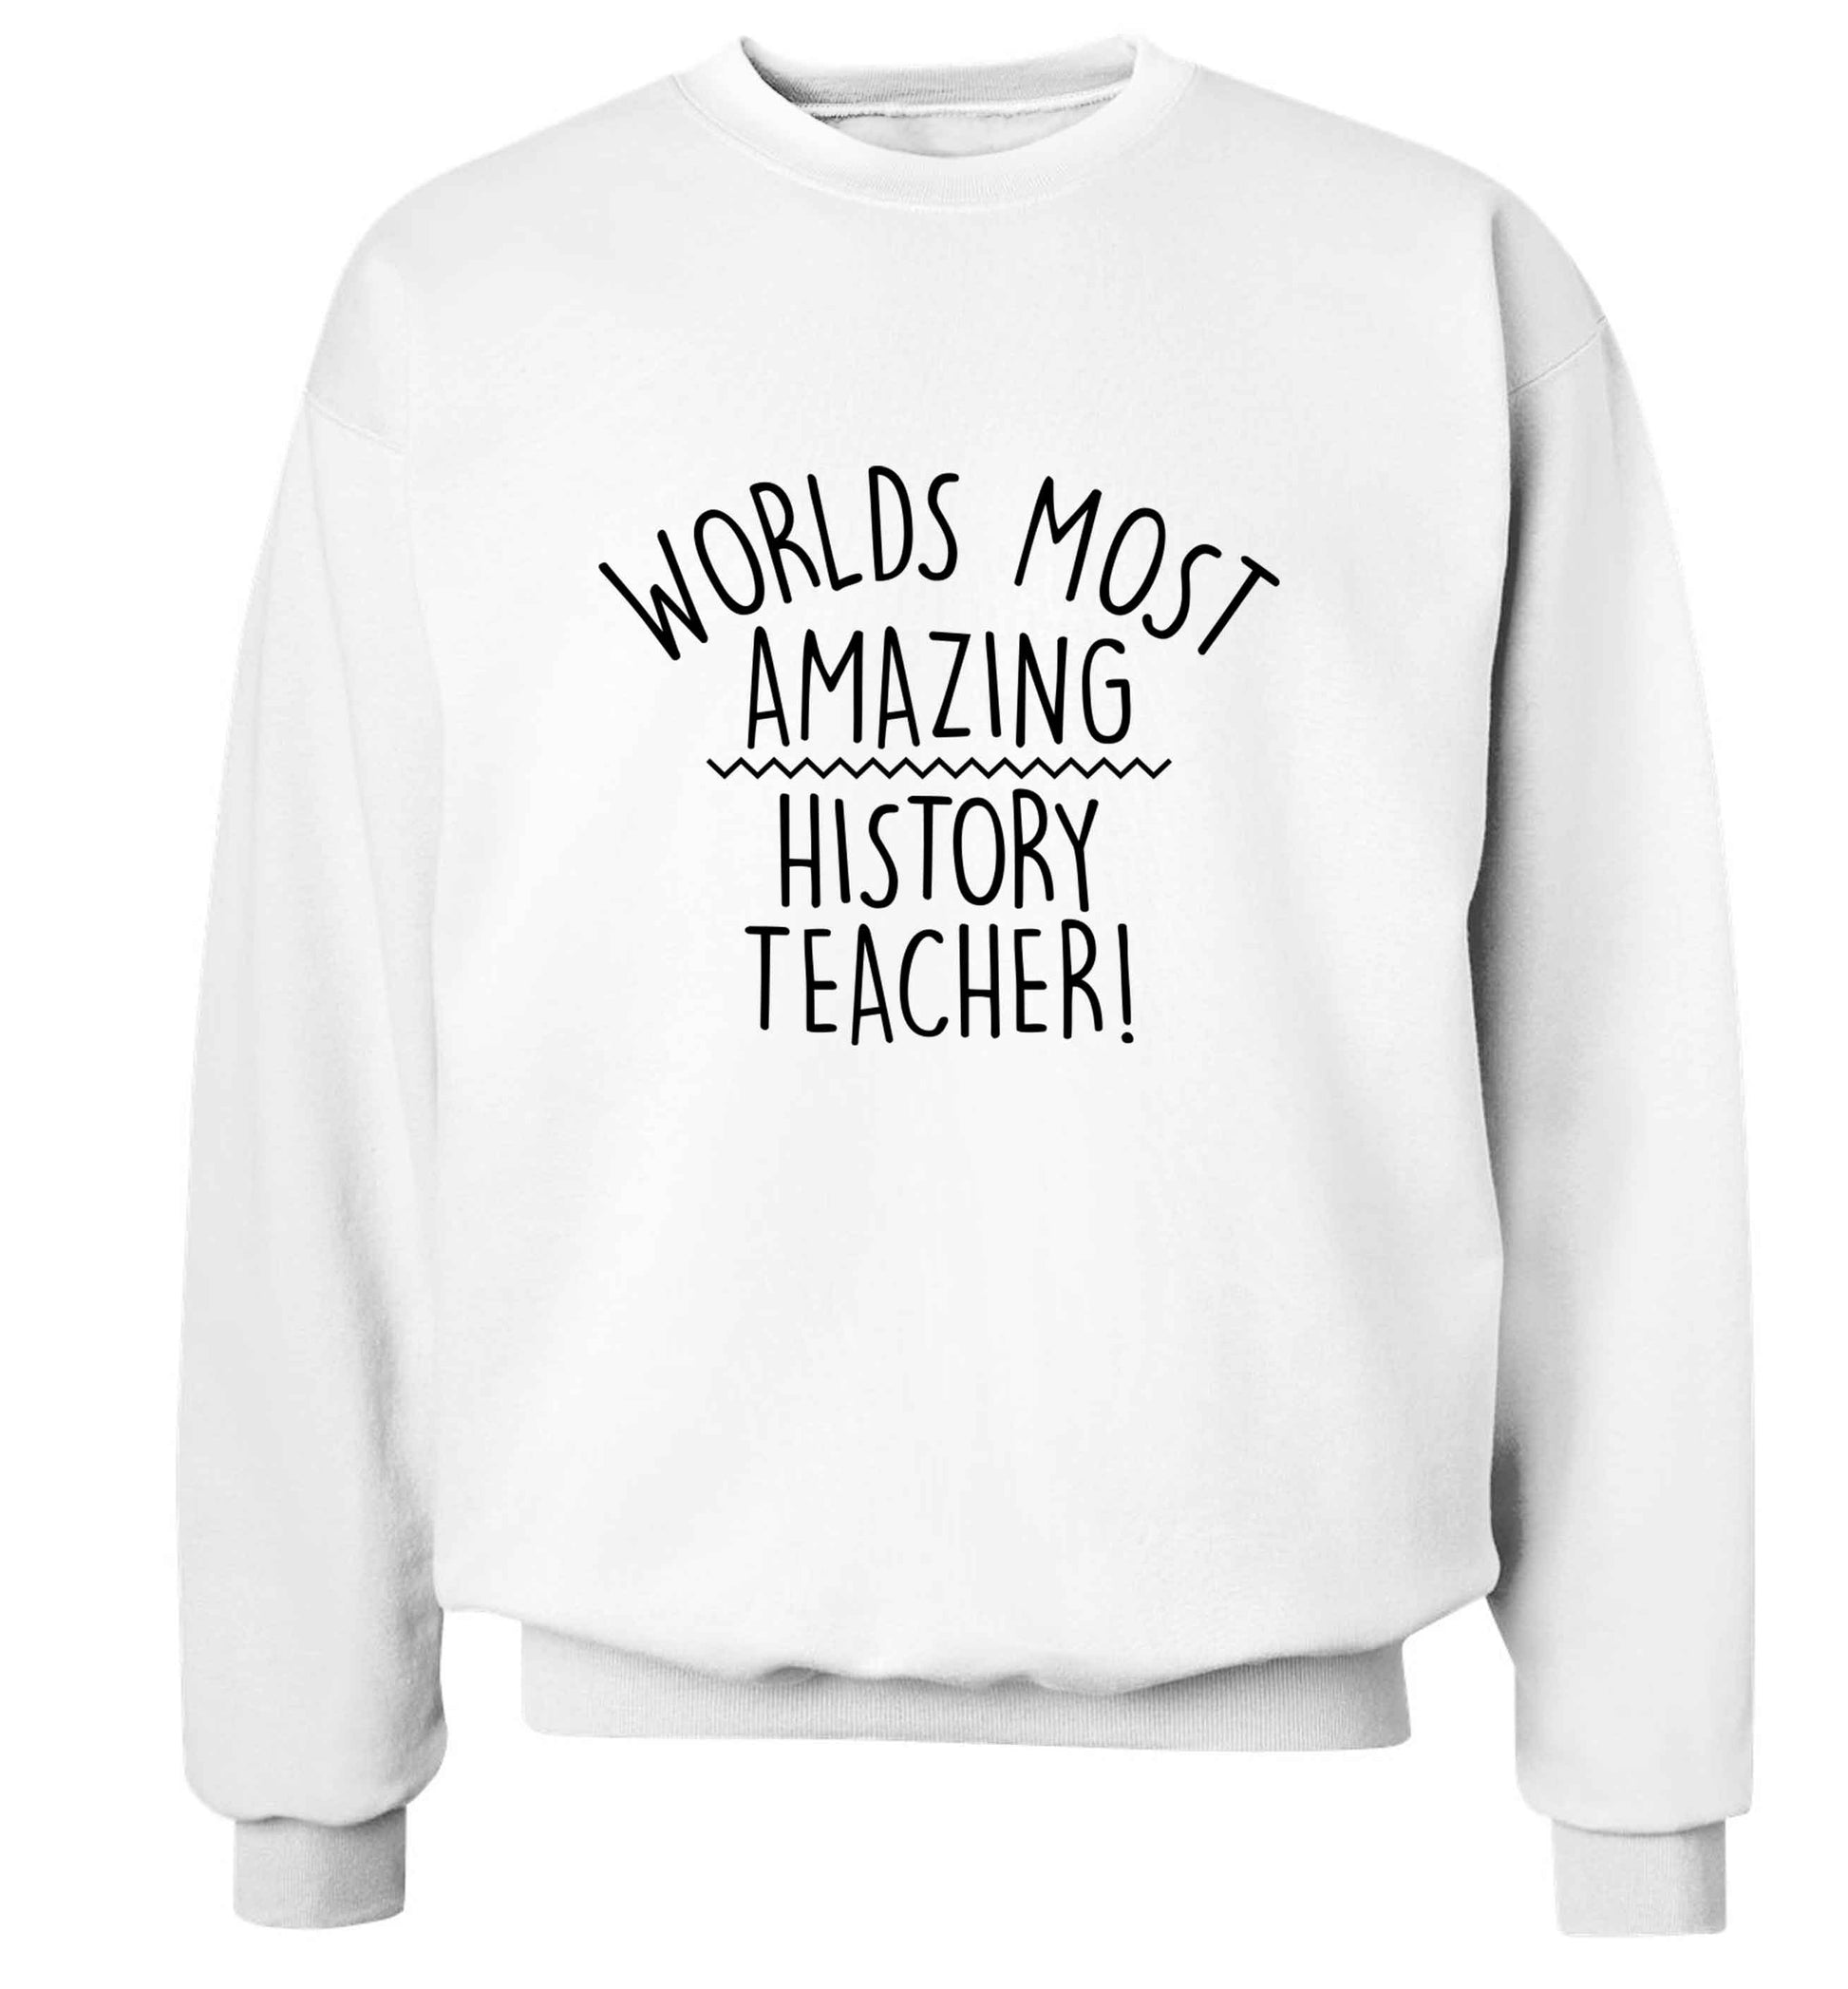 Worlds most amazing History teacher adult's unisex white sweater 2XL